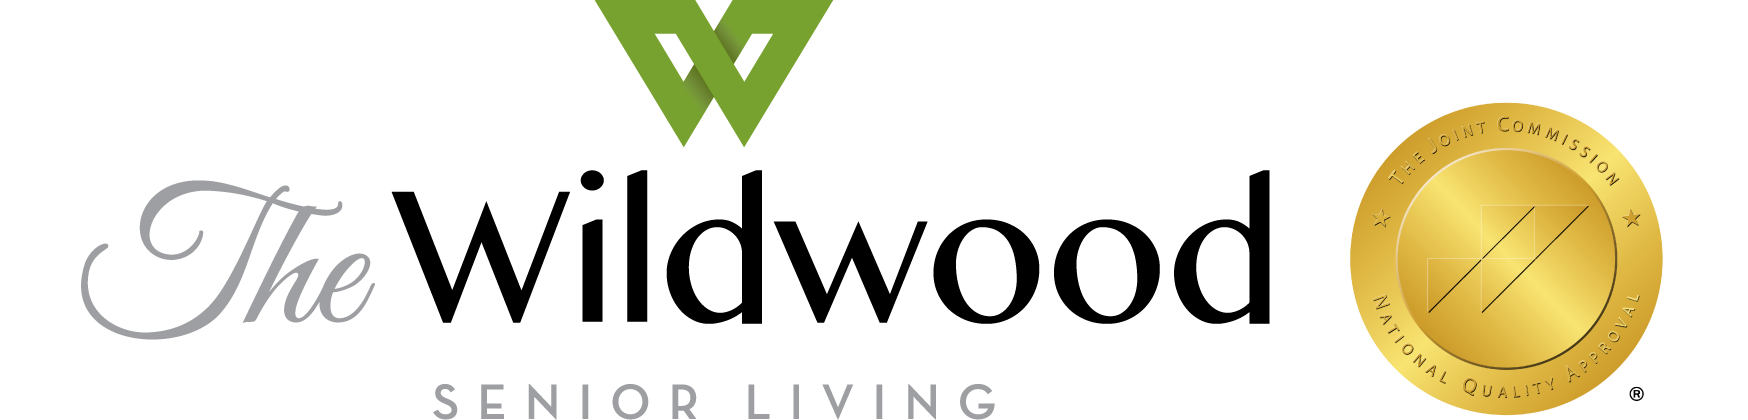 The Wildwood Senior Living - Joint Commission Award Badge